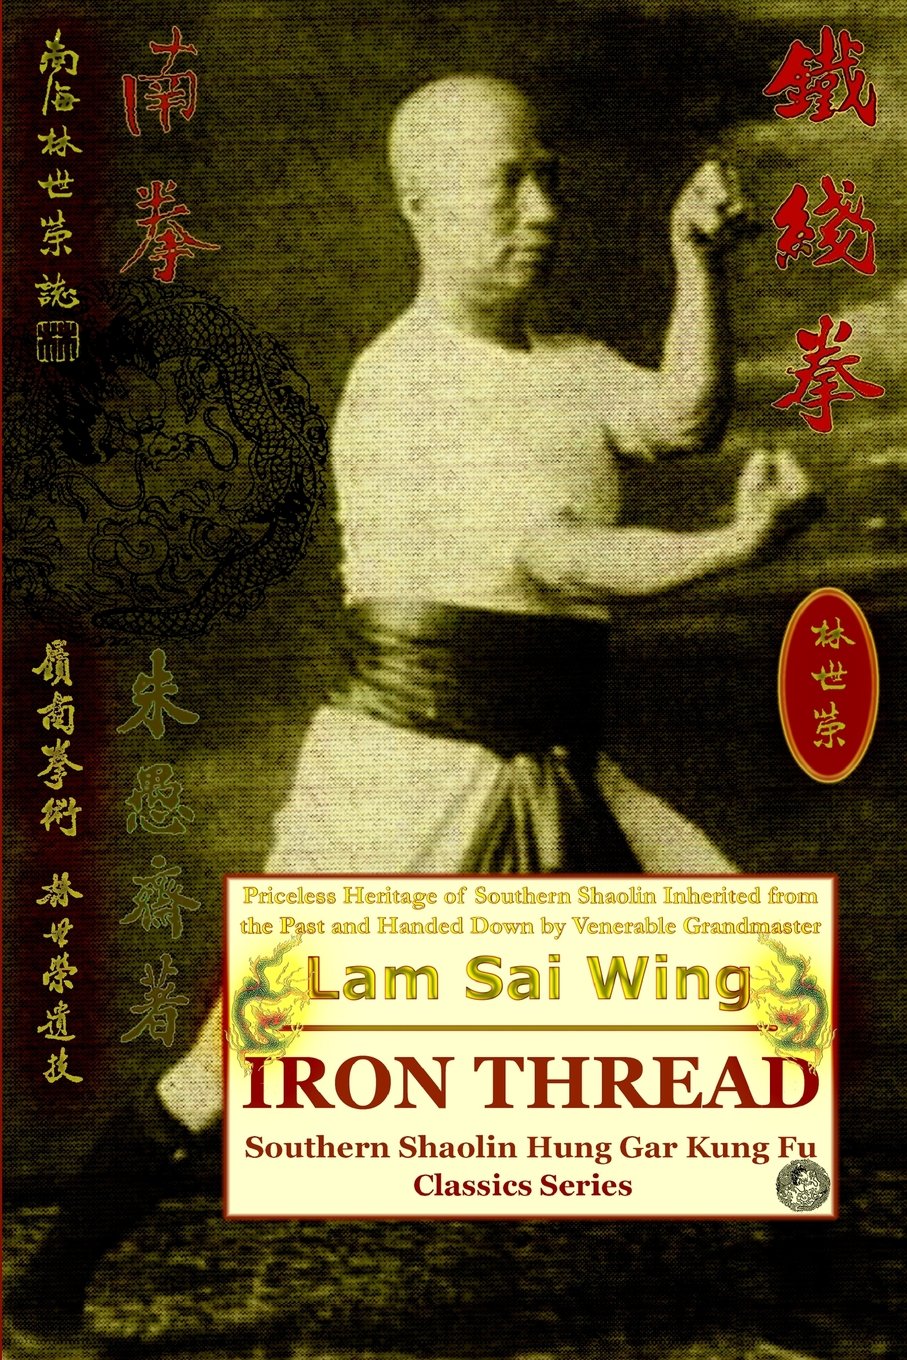 Iron Thread. Southern Shaolin Hung Gar Kung Fu Classics Series (Inglês) capa do Livro